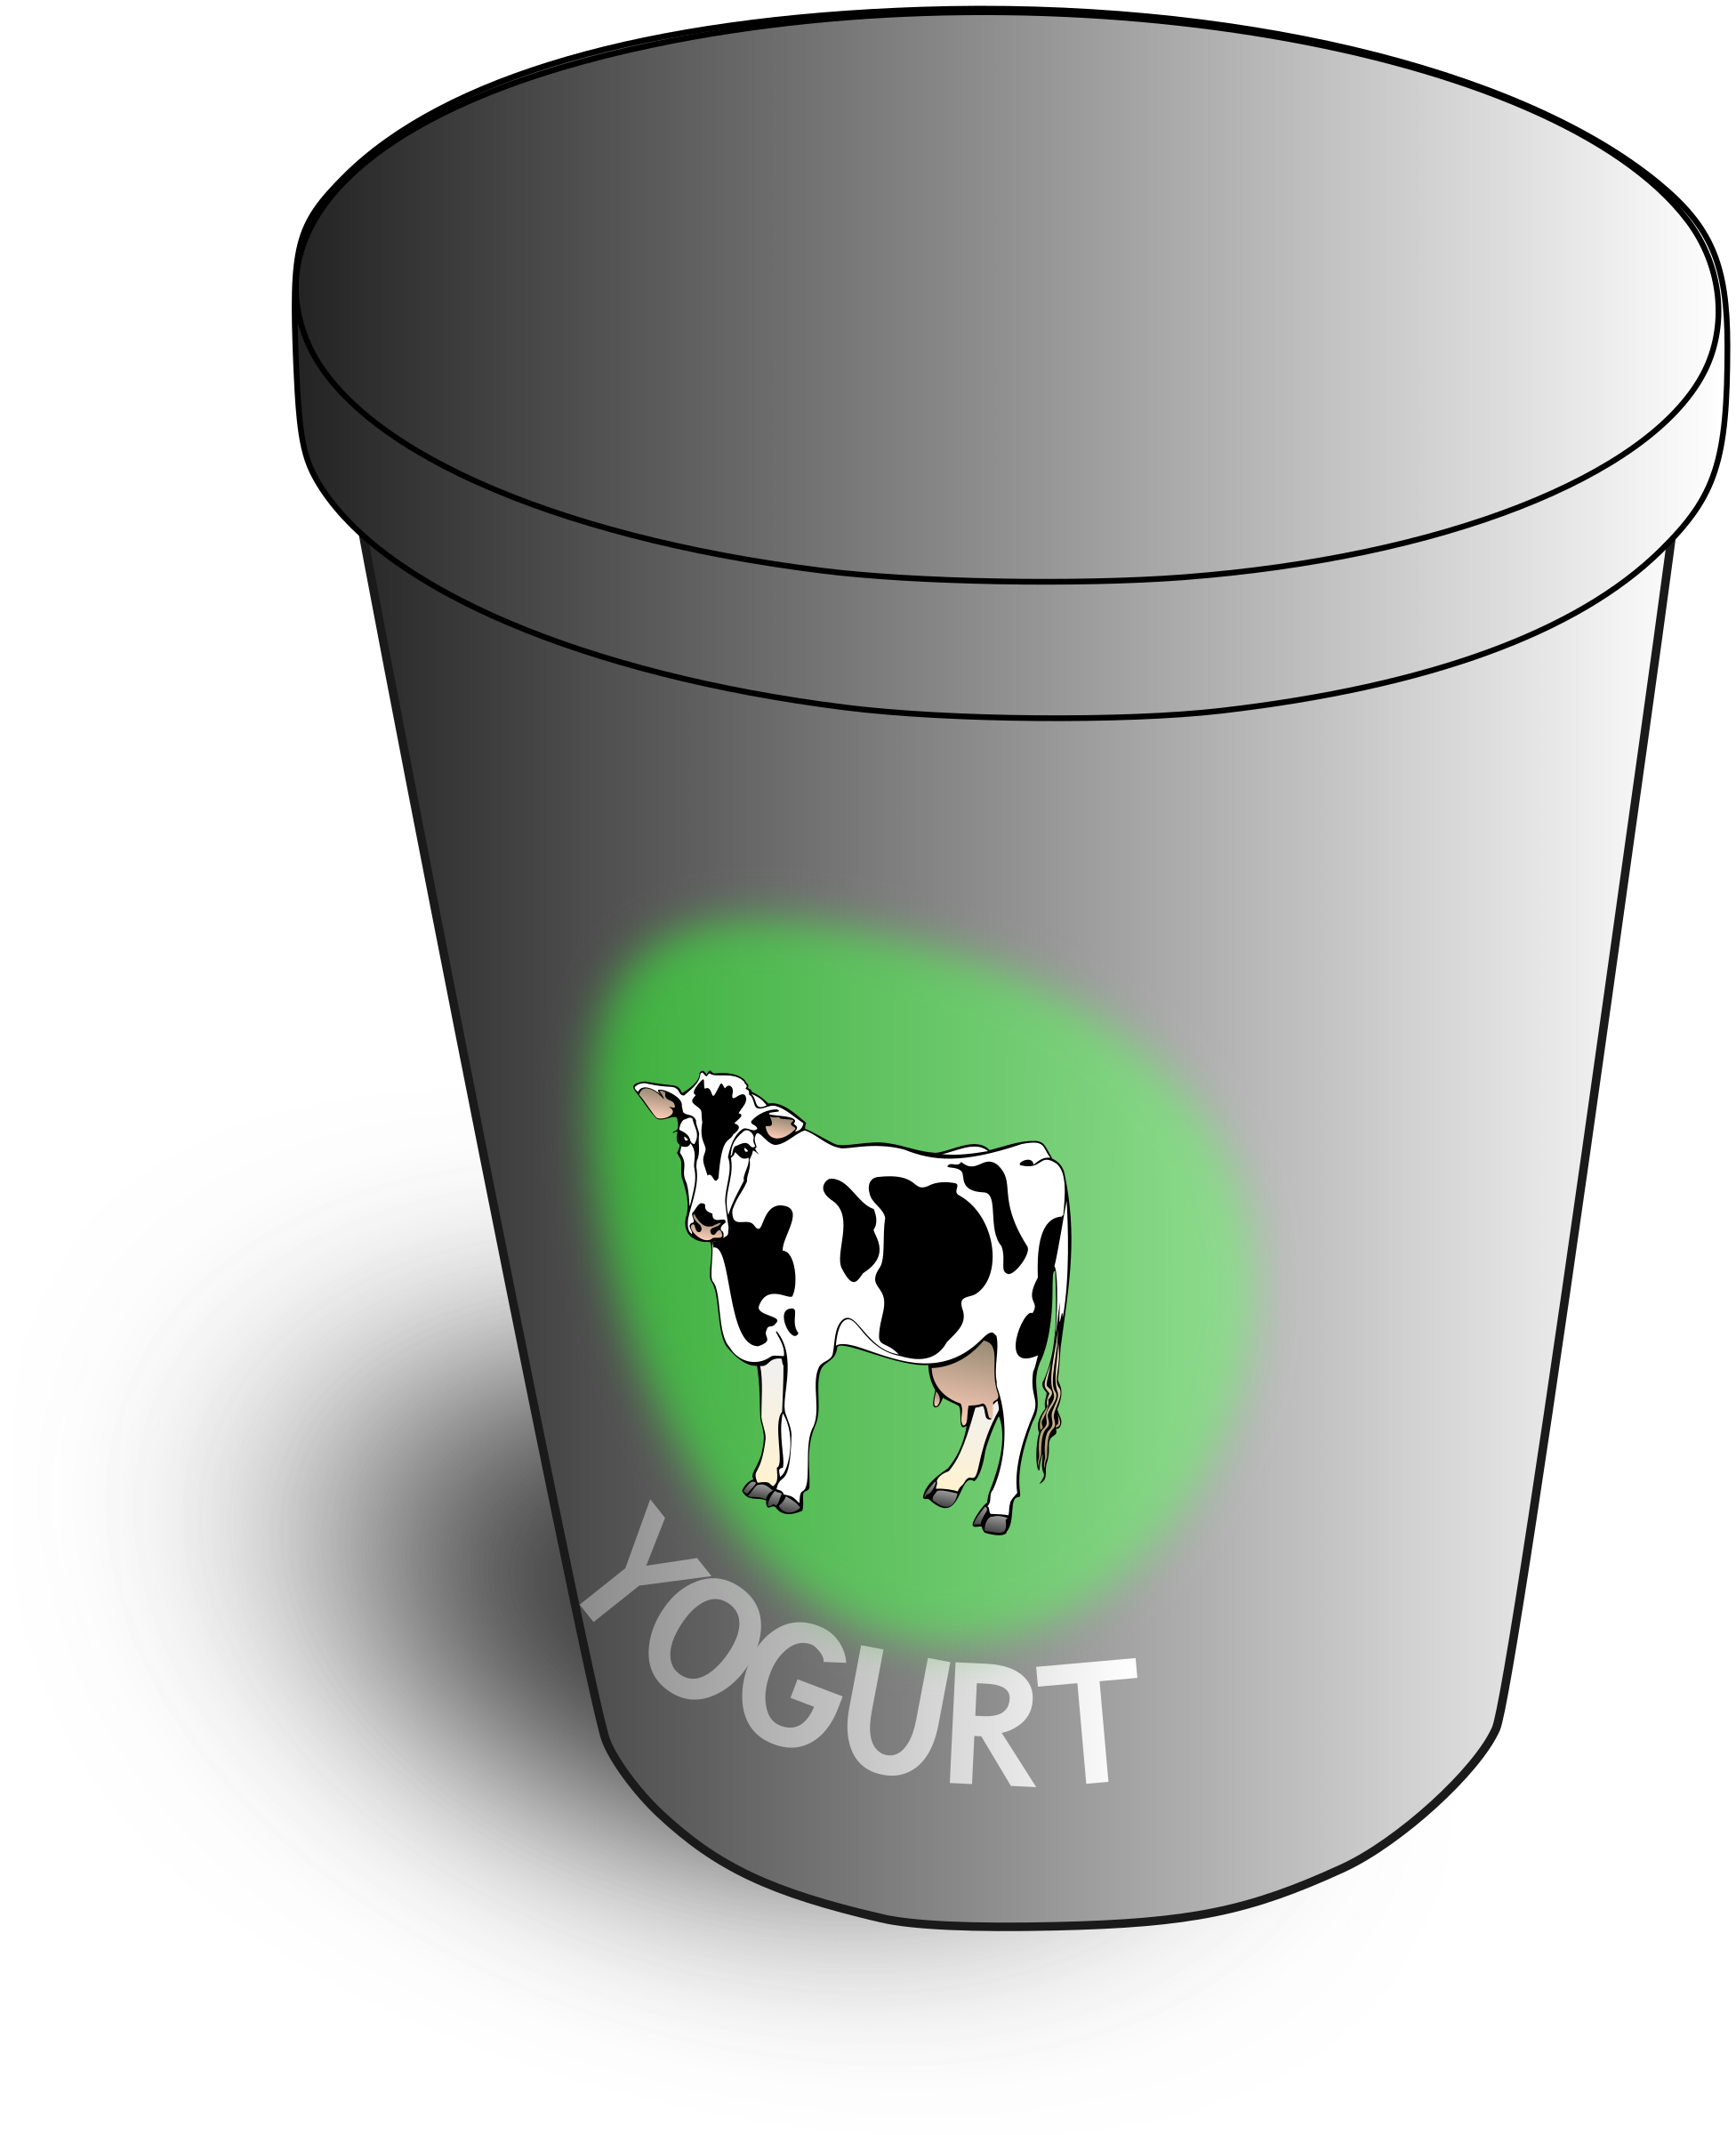 yogurt clip art free - photo #20